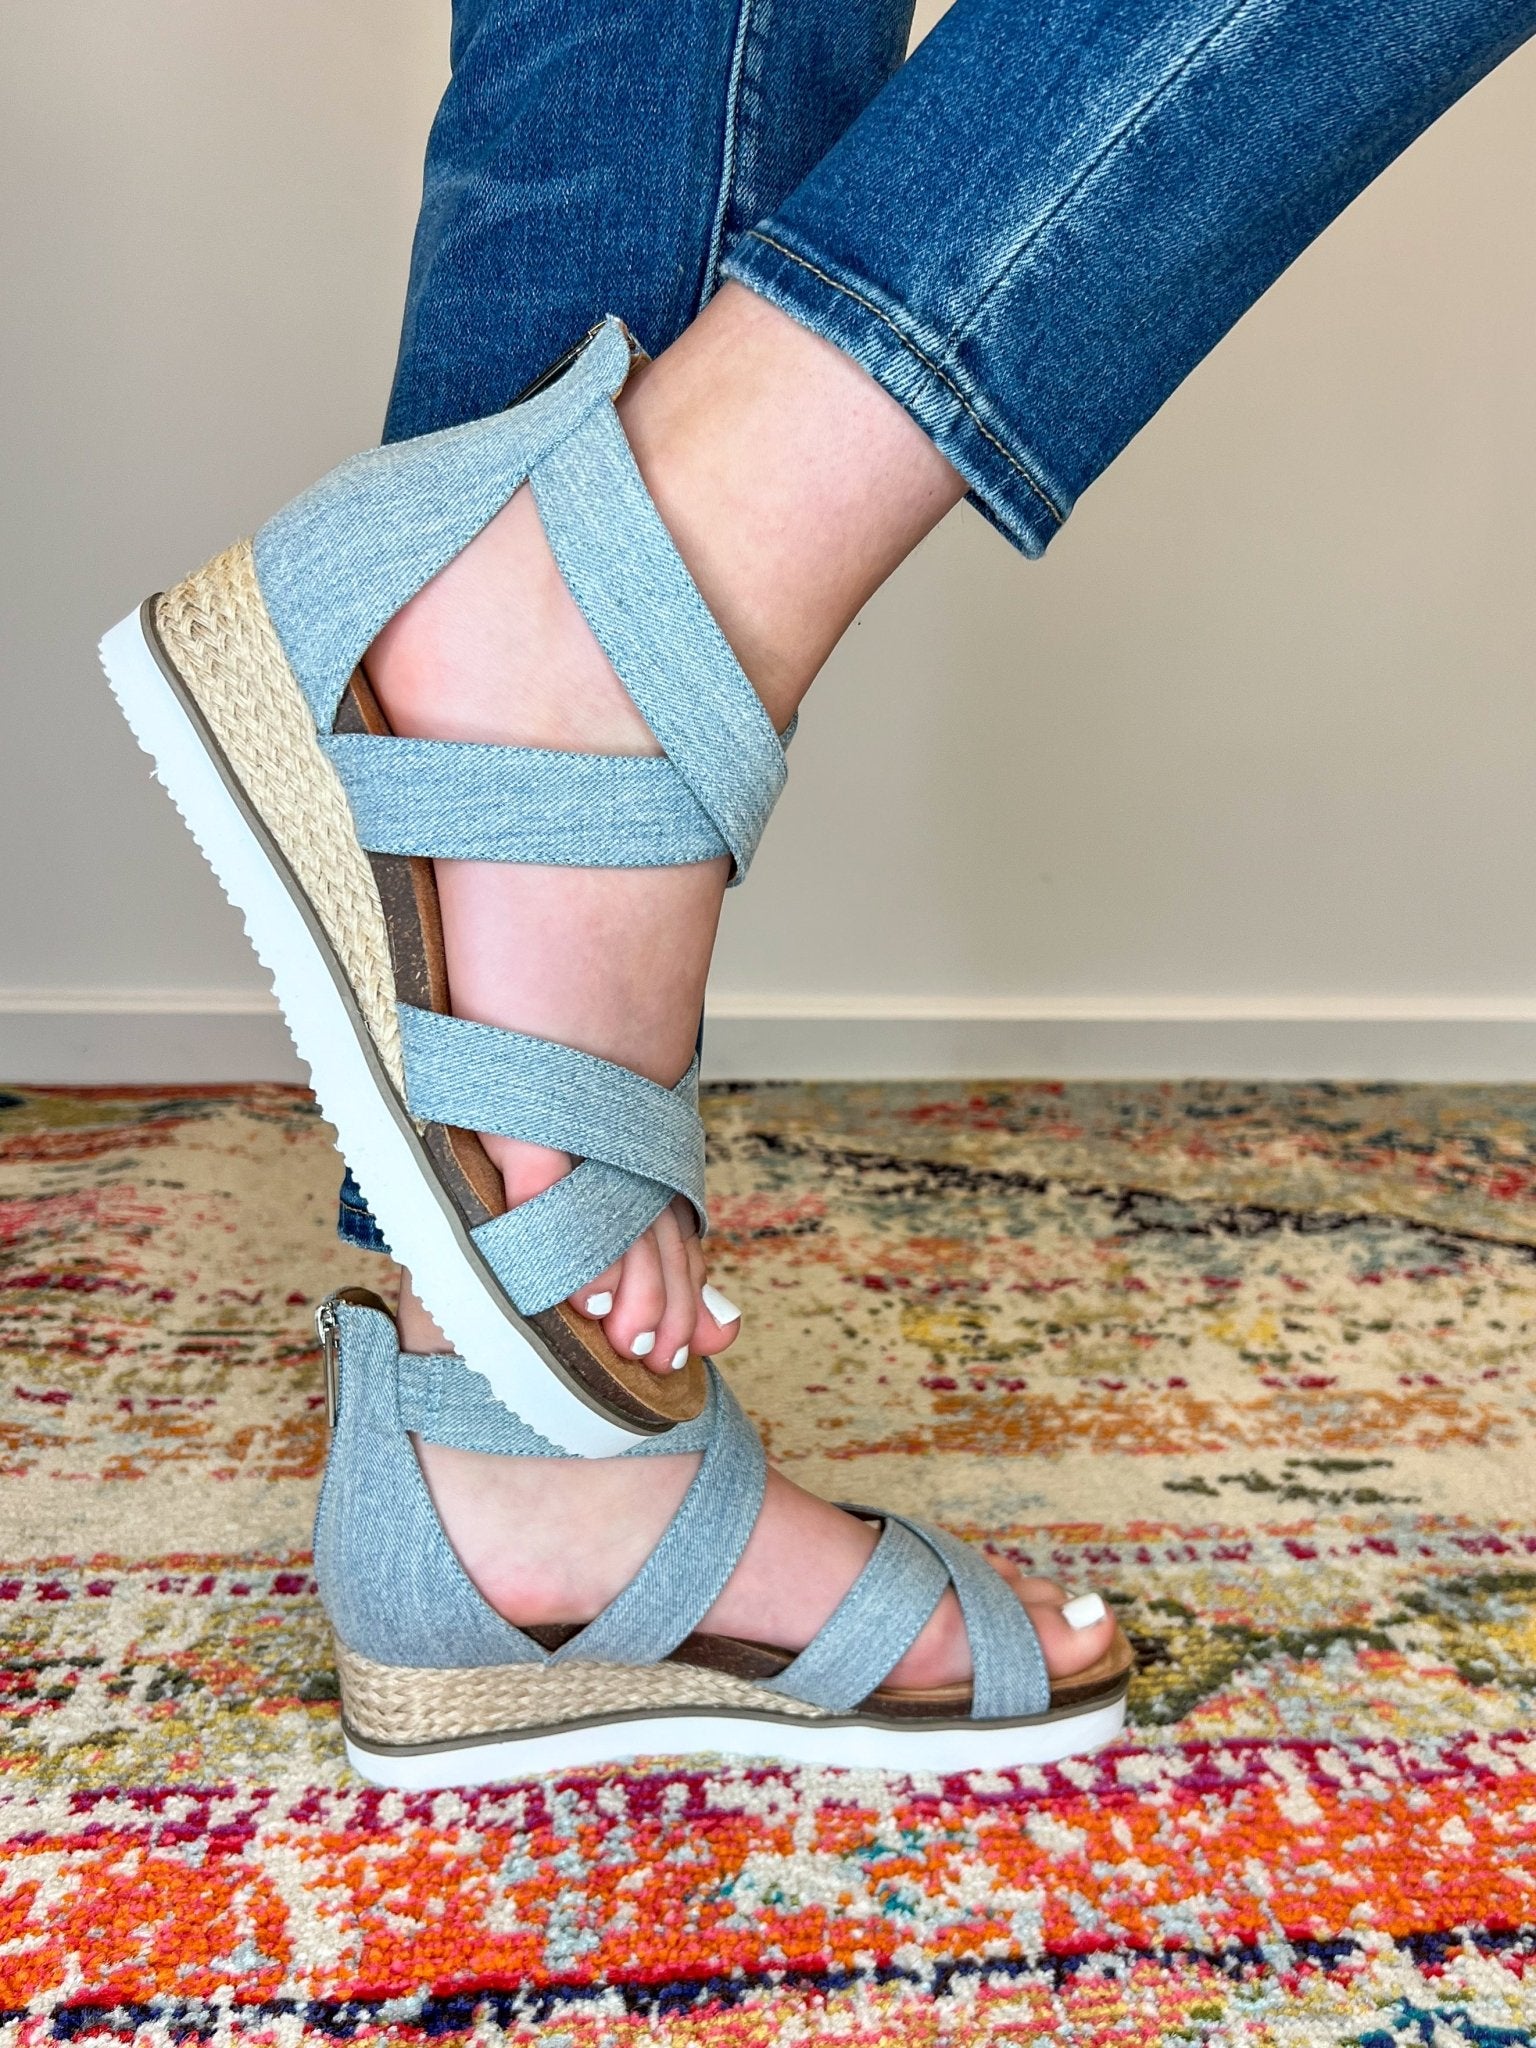 Double Dutch Sandal - Blue Denim - Lavender Hills BeautyCorkys Footwear41-0281-BLDN-Q-6